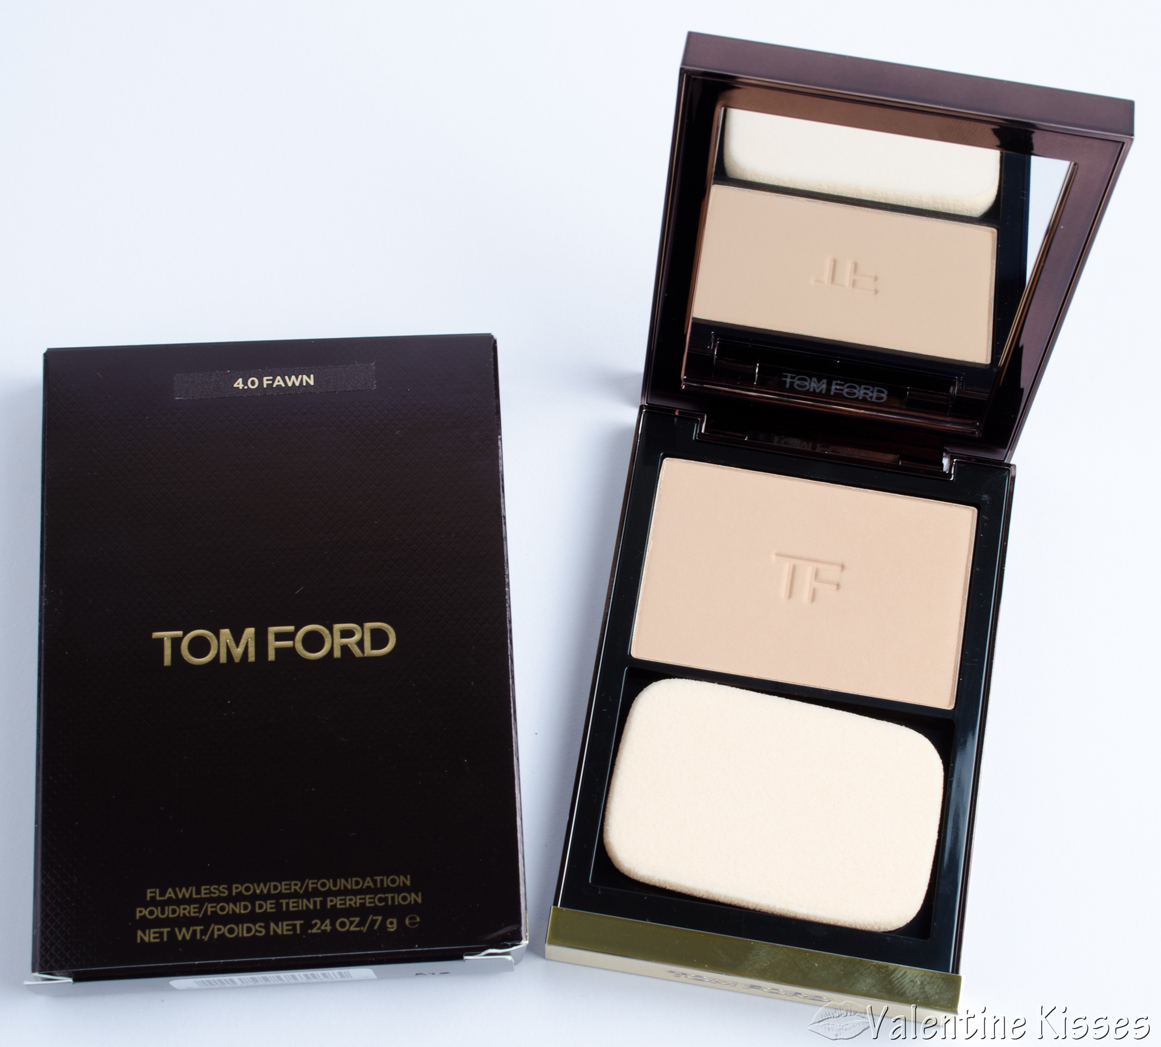 Valentine Kisses: Tom Ford Flawless Powder Foundation - shade 4.0 Fawn ...